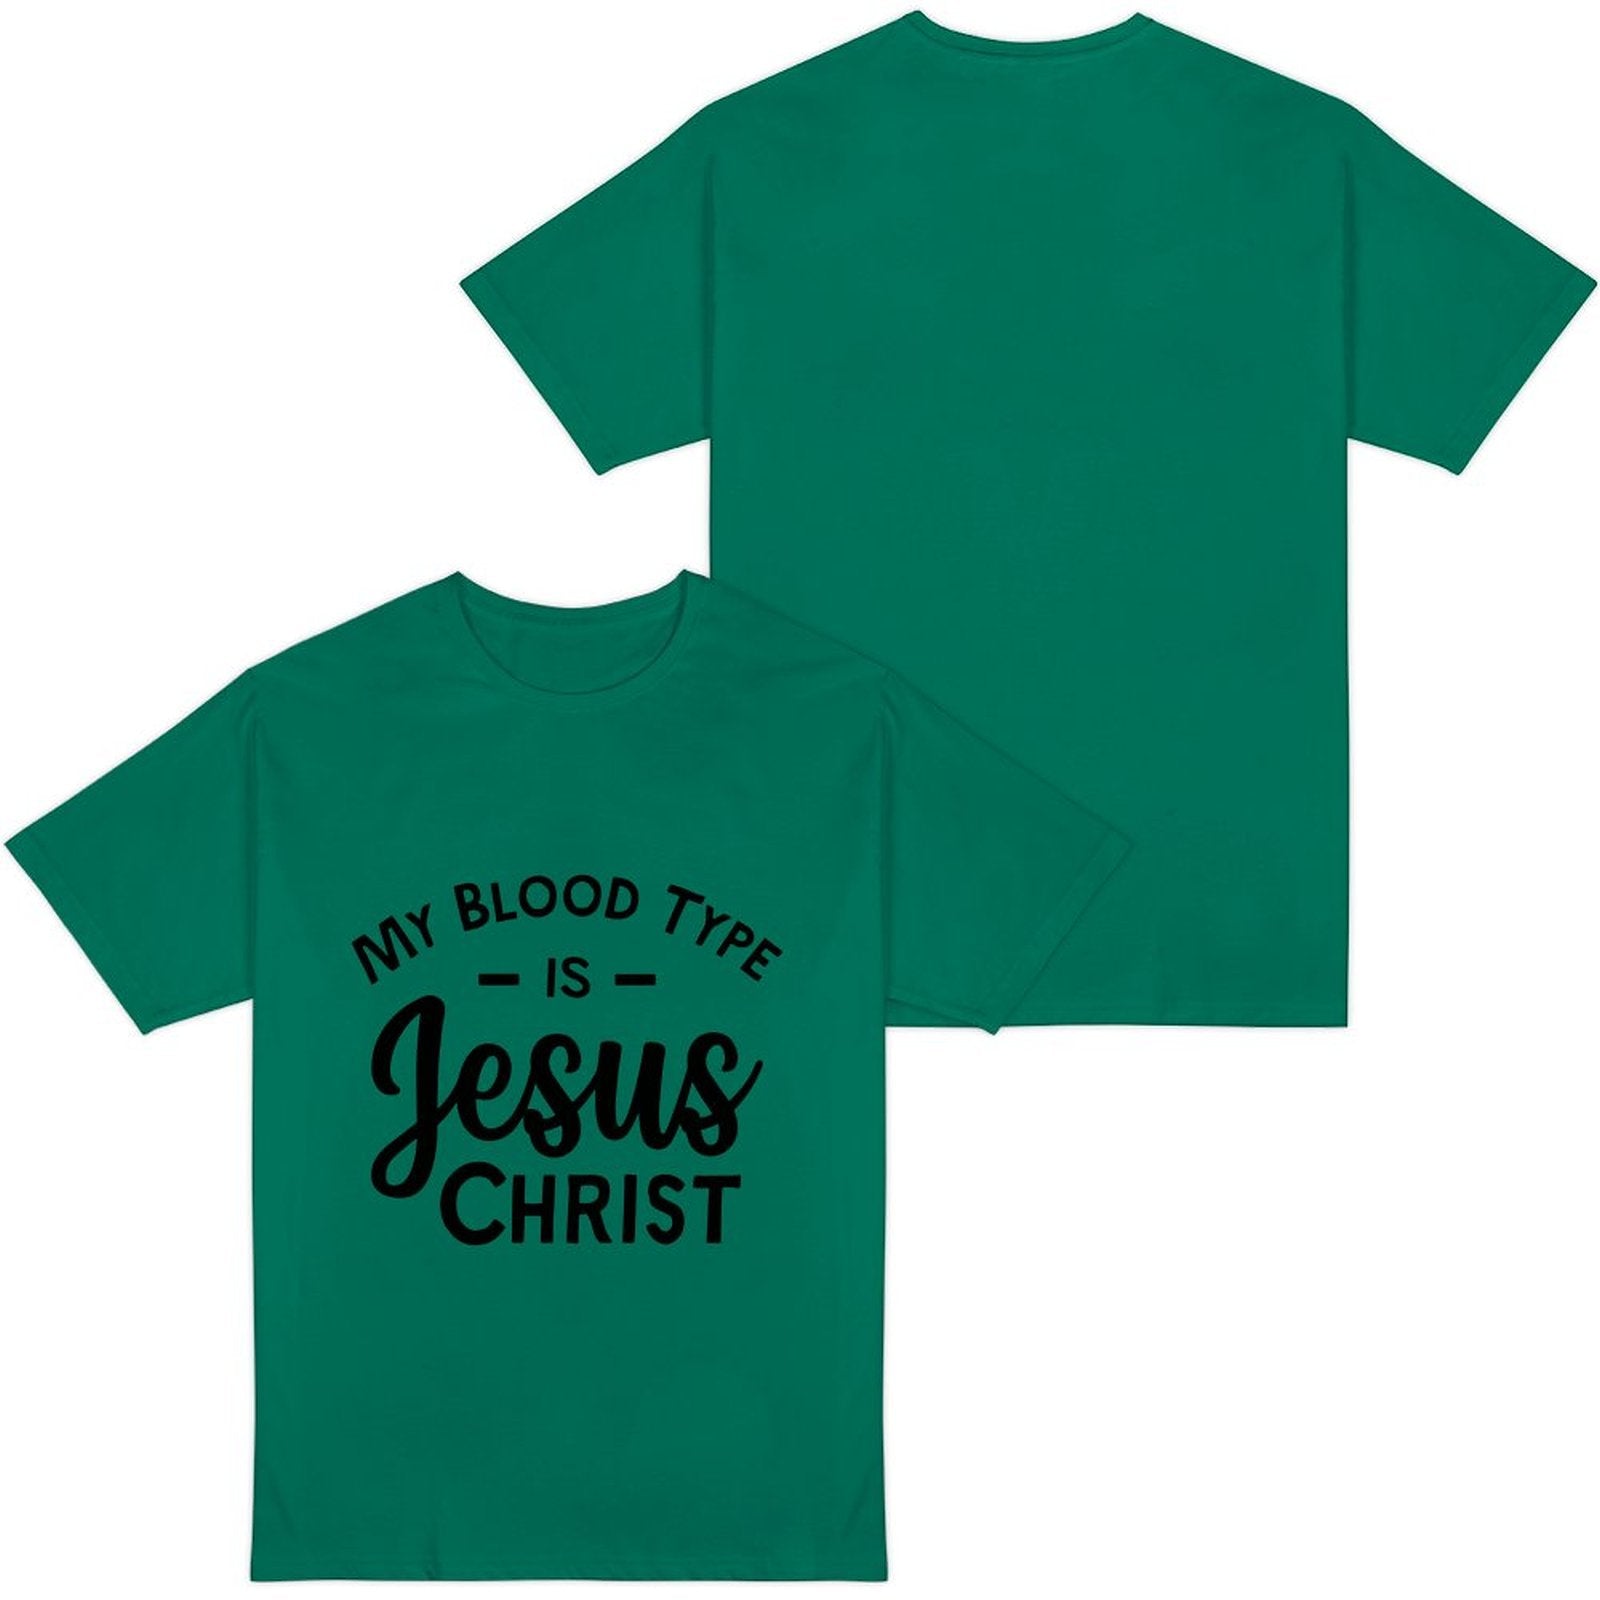 My Blood Type Is Jesus Christ Women's Christian T-shirt SALE-Personal Design